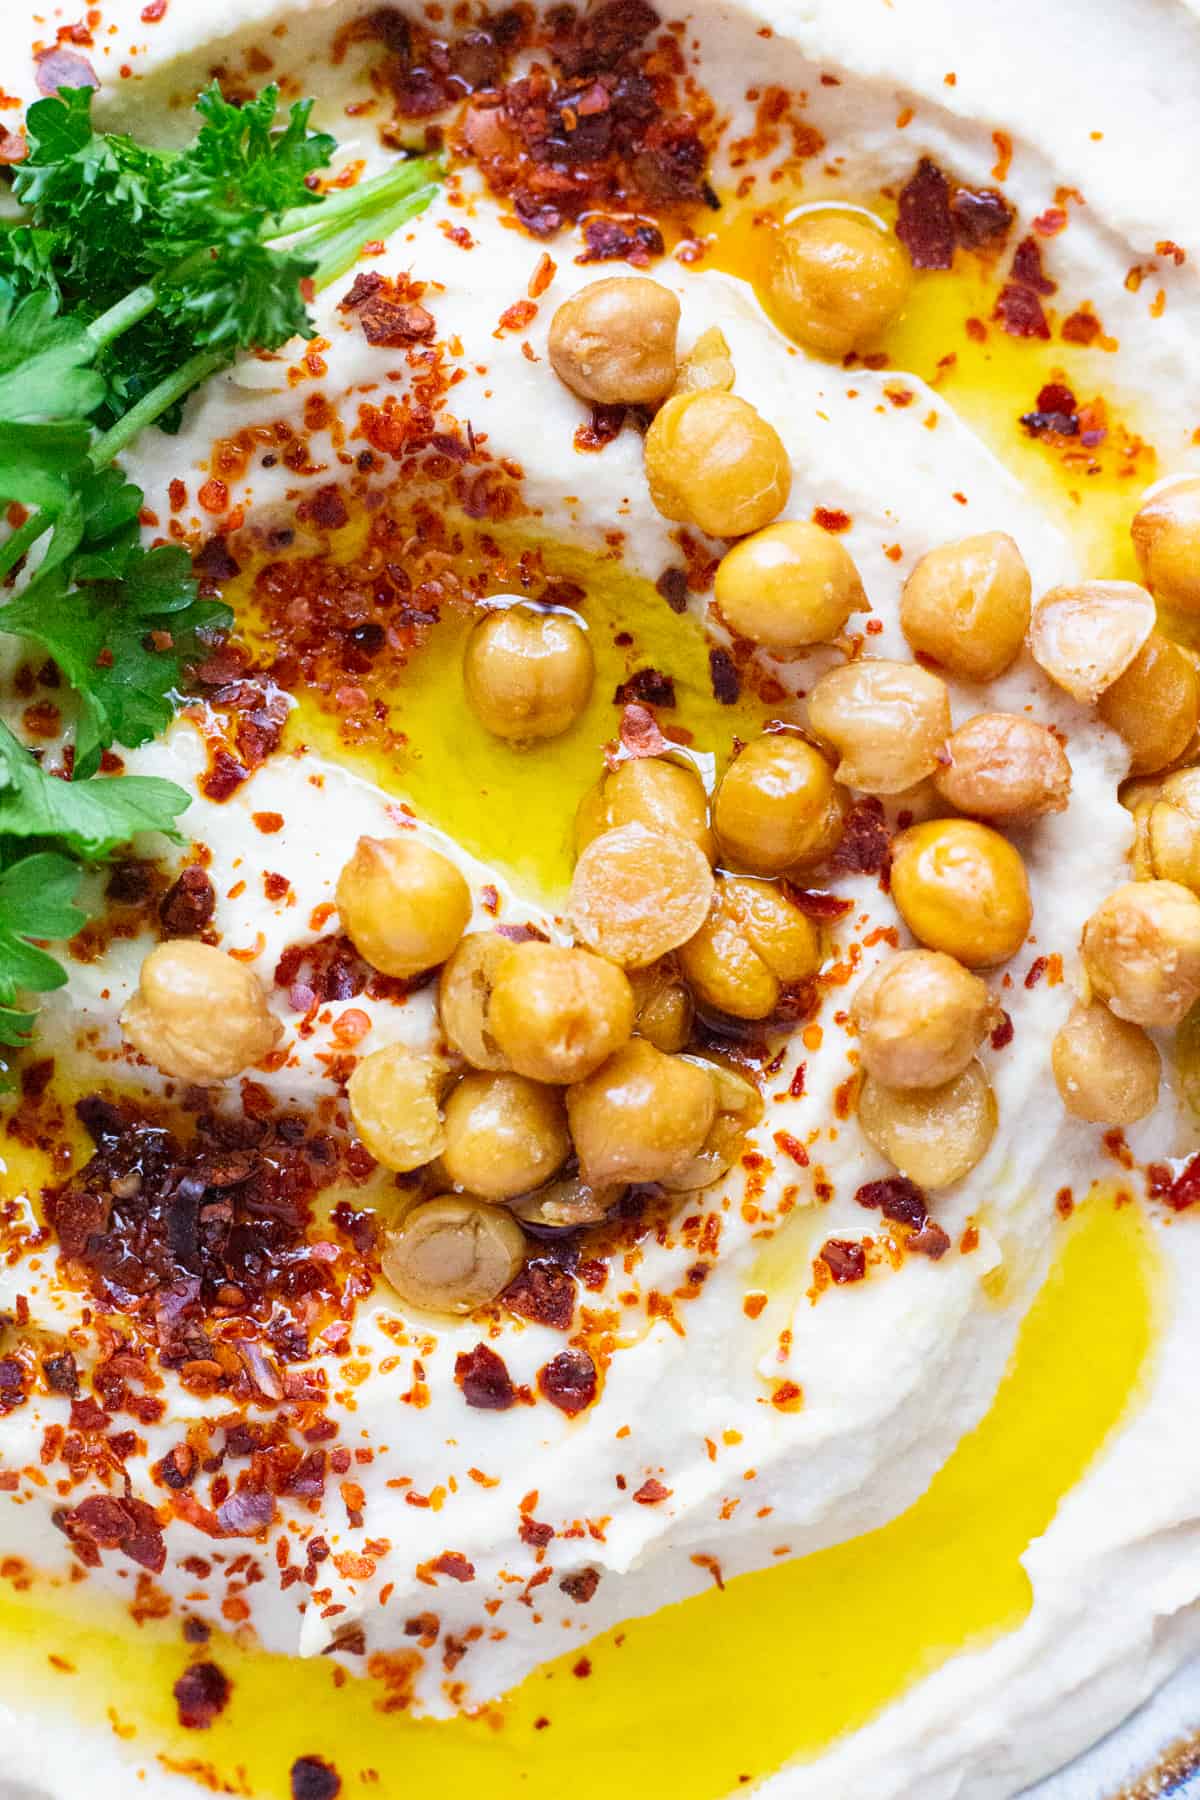 homemade hummus Mediterranean diet recipes